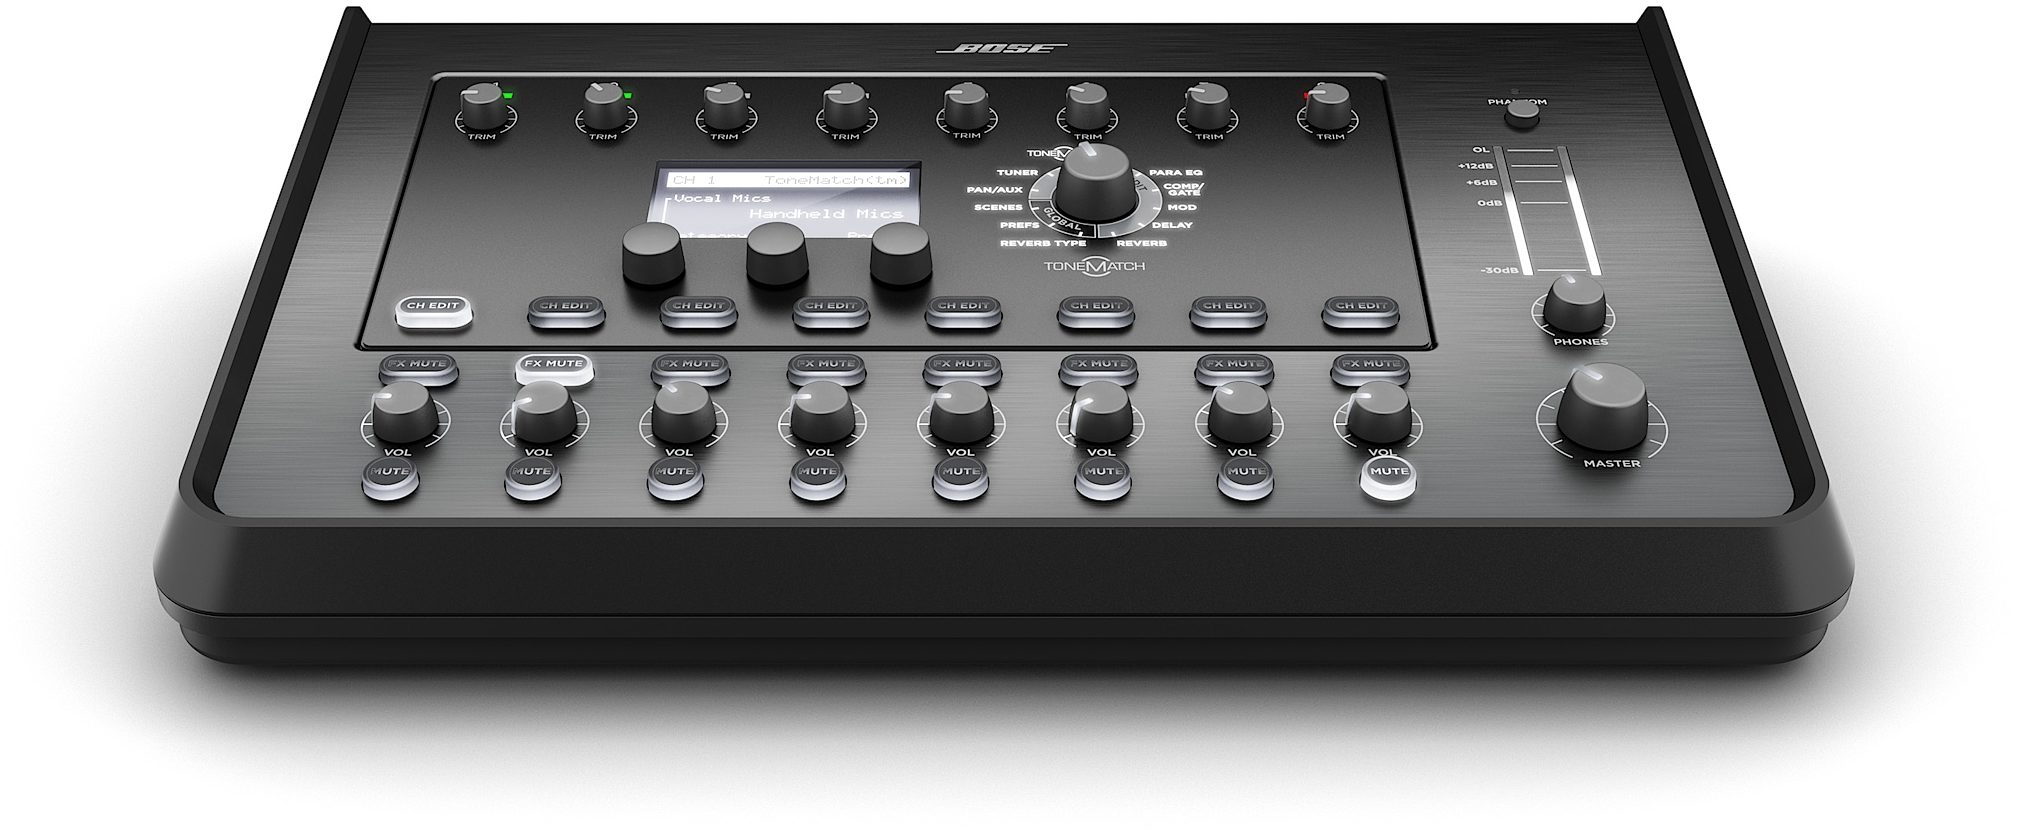 Bose T8S ToneMatch Compact Digital Mixer, 8-Channel | zZounds